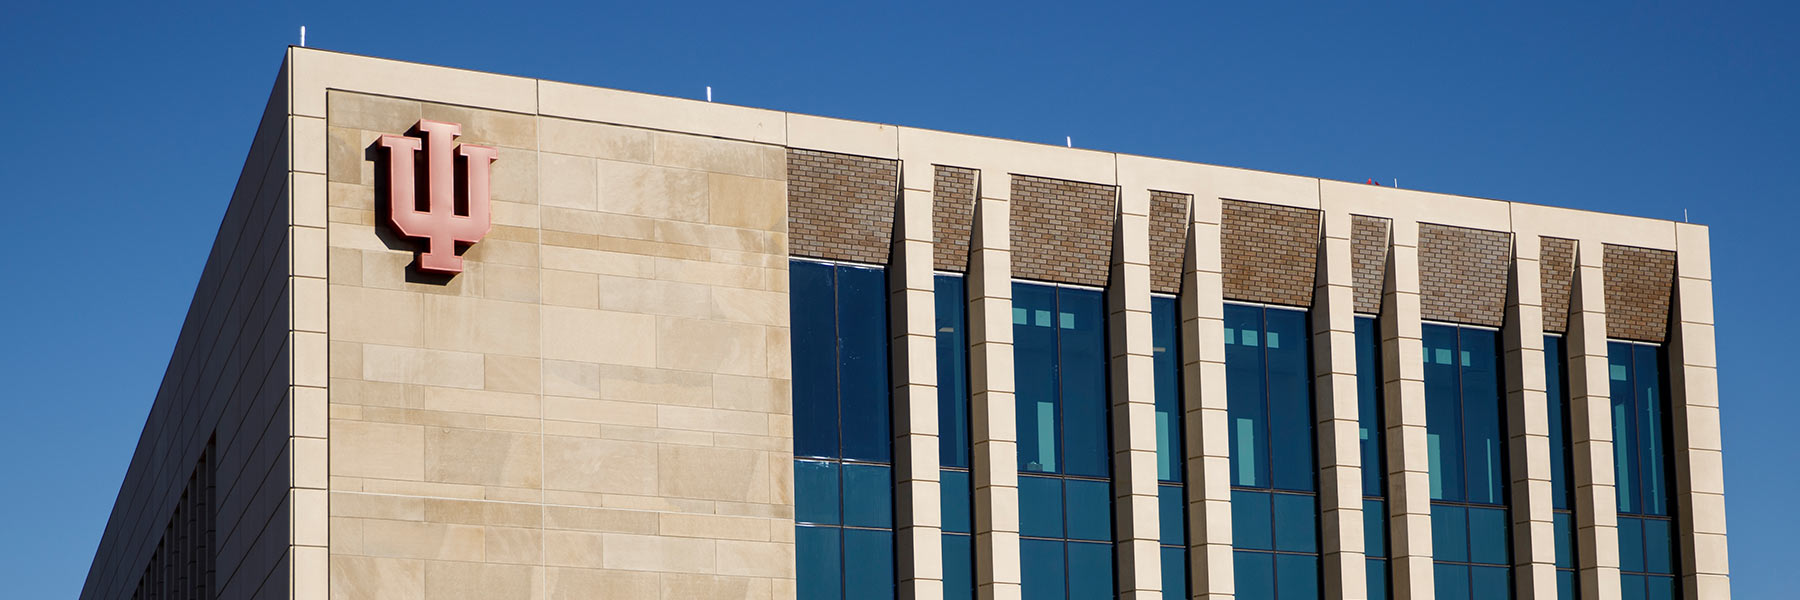 The Health Sciences building against a blue sky